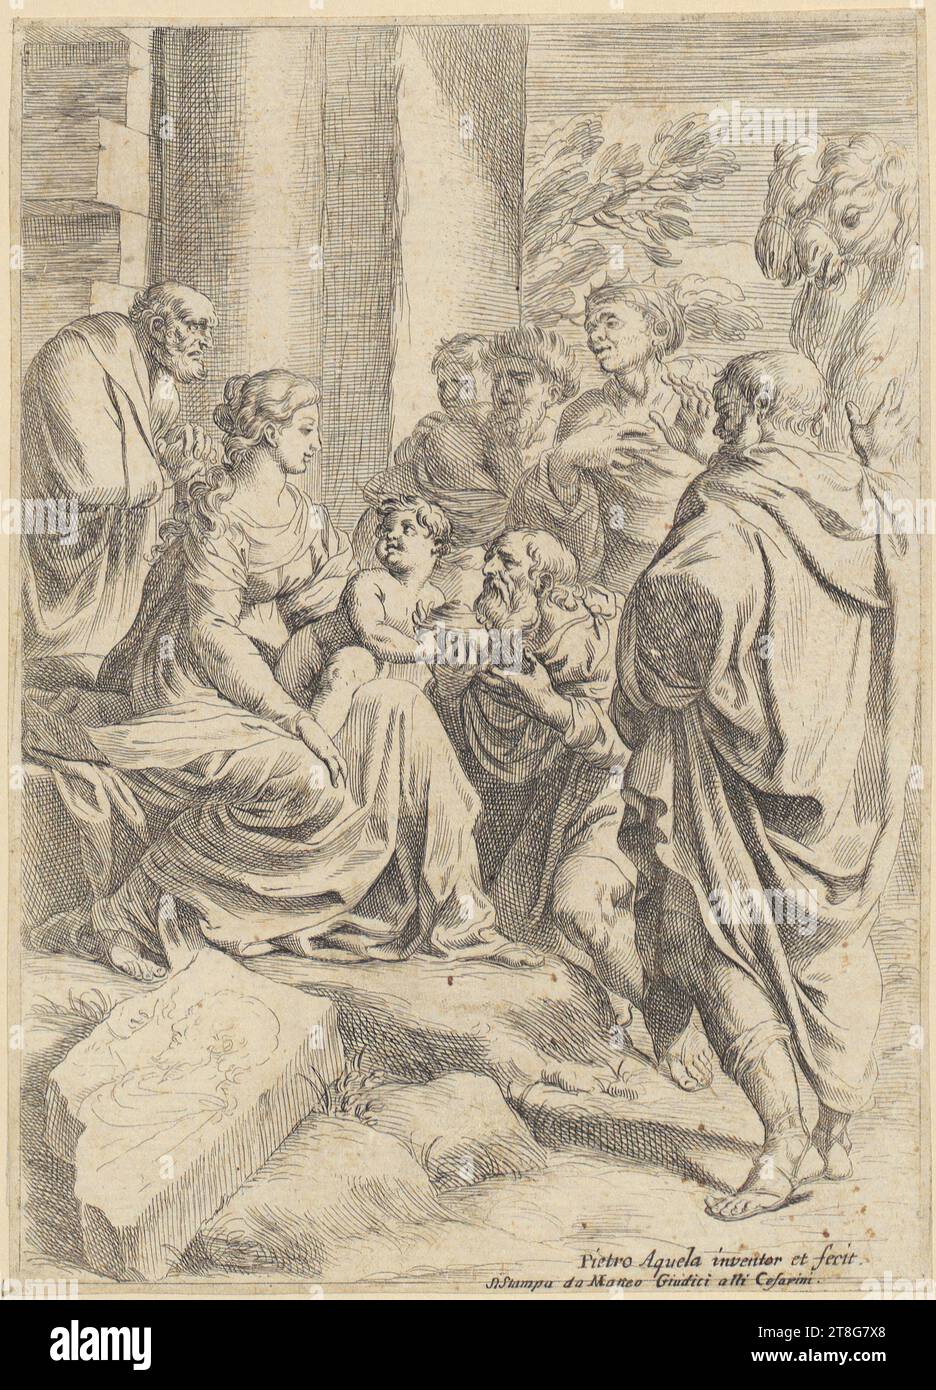 Pietro Testa (1612 - 1650), artist Pietro Berrettini (1596 - 1669), after Nicolas Poussin (1594 - 1665), after, Martyrdom of Saint Erasmus, Pietro Testa (1612 - 1650), artist Nicolas Poussin (1594 - 1665), after Giovanni Giacomo De Rossi (1627 - 1691), editor, Martyrdom of St. Erasmus, Pietro Aquila (died 1692)Matteo Giudici (1670 around - 1692 active), editor, Adoration of the Magi, origin of the print carrier: 1665 - 1692, etching, sheet size: 18. 9 x 13.6 cm, bottom right signed and inscribed 'Pietro Aquela inventor et fecit. Stock Photo